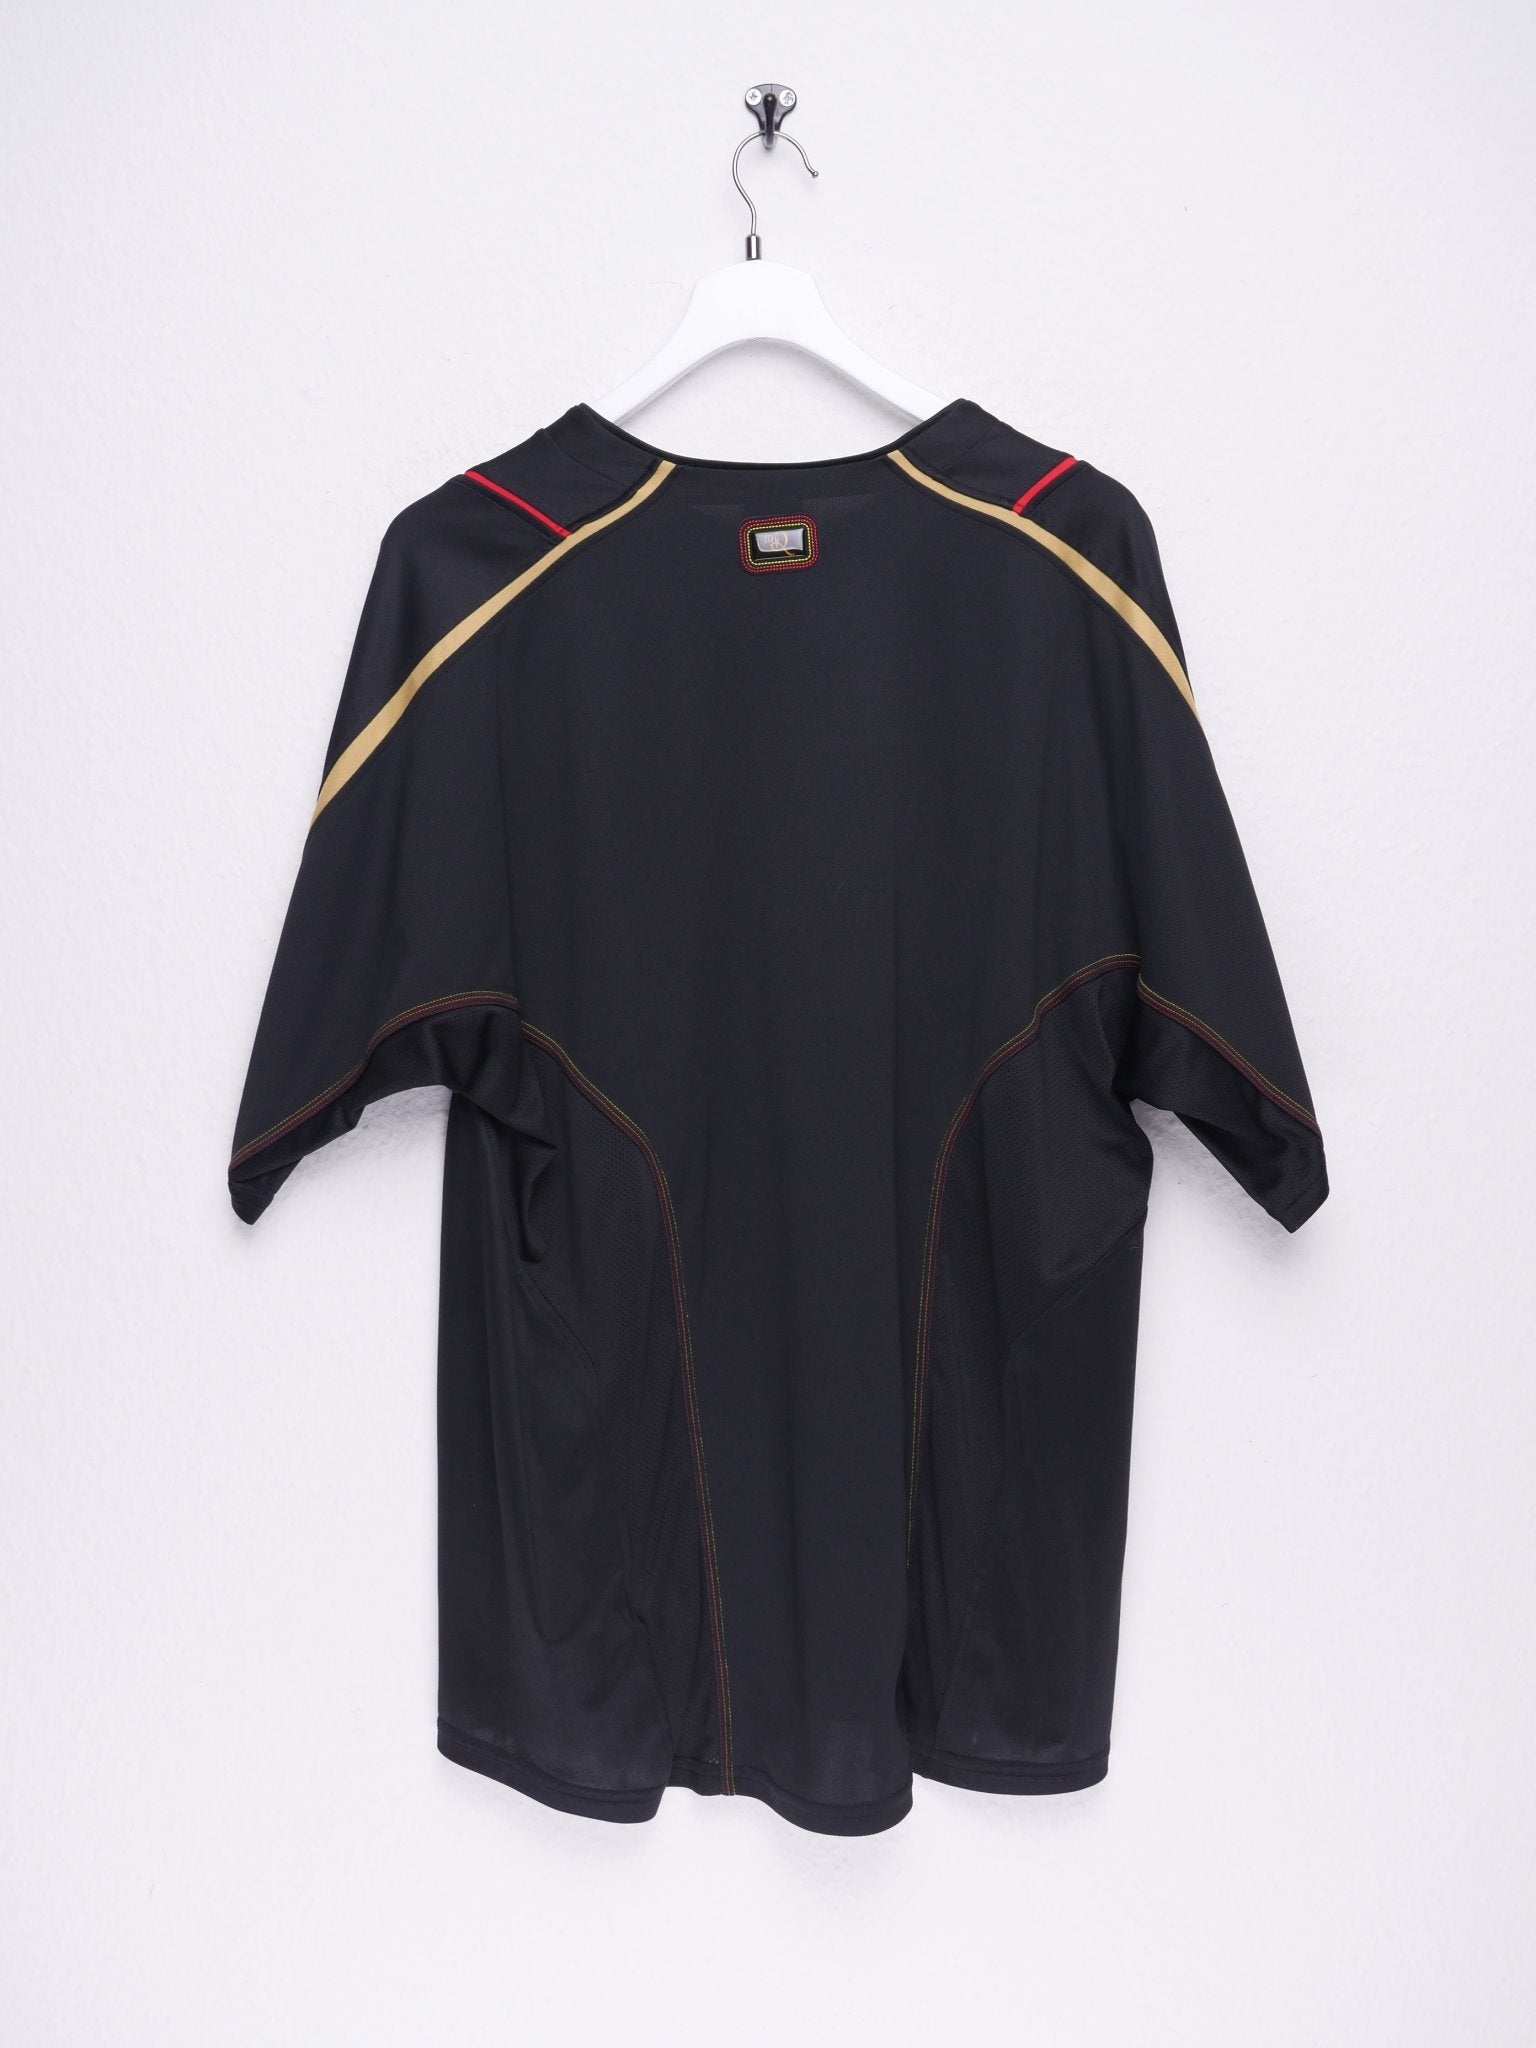 Nike Soccer printed Logo Vintage Jersey Shirt - Peeces